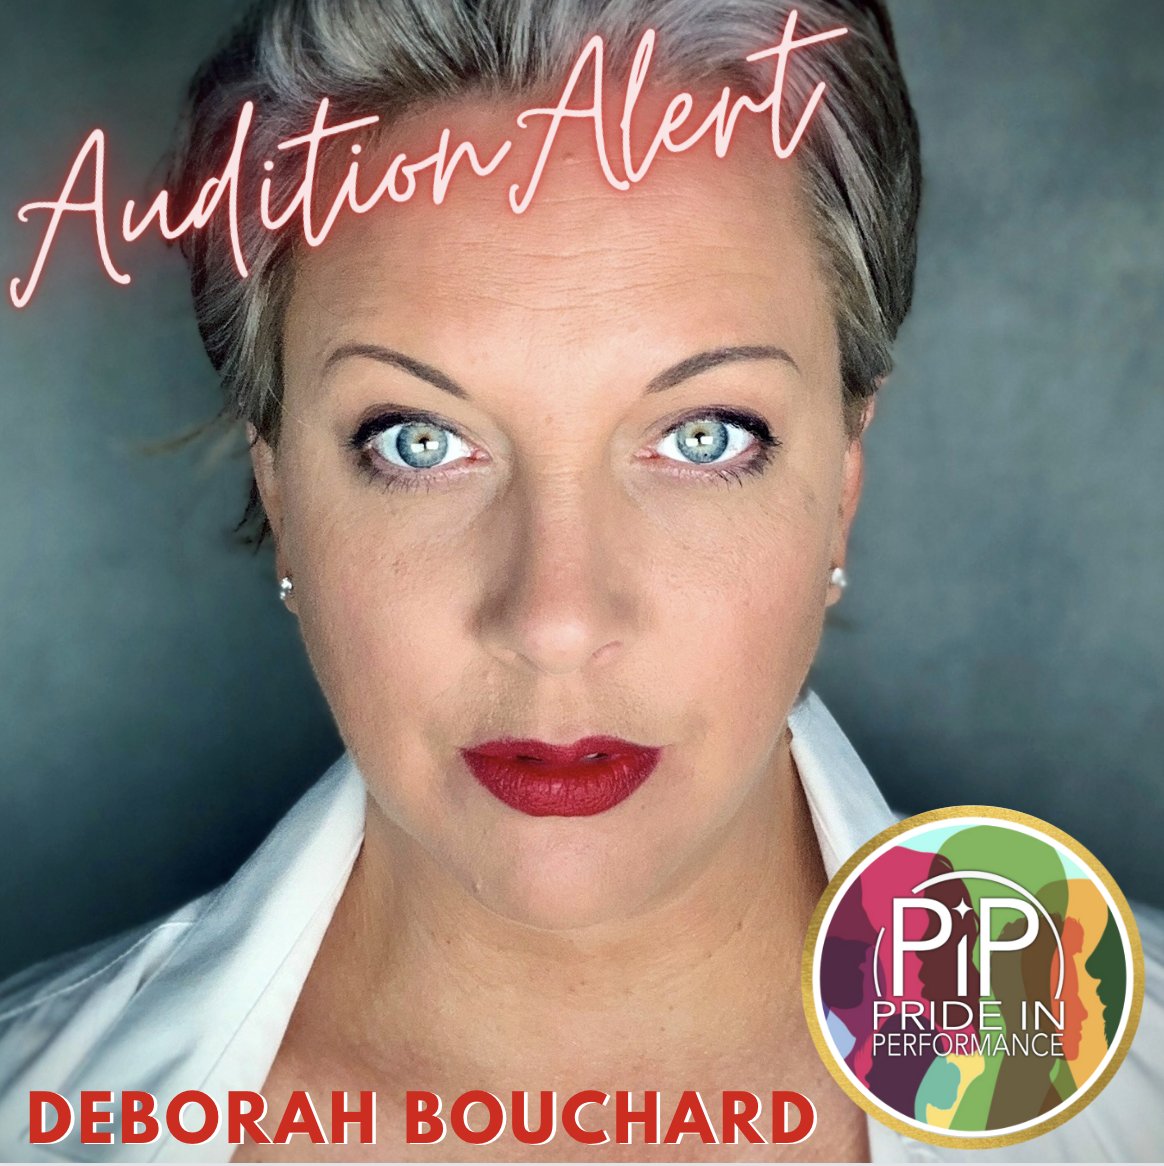 🚨 Audition Alert For DEBORAH BOUCHARD 🚨
@DebsBouchard enjoying a lovely #SelfTape #Casting for a #Commercial 
spotlight.com/9115-9086-4826 
#PositivelyPiP 
#AuditionAlert 
#ActorsLife